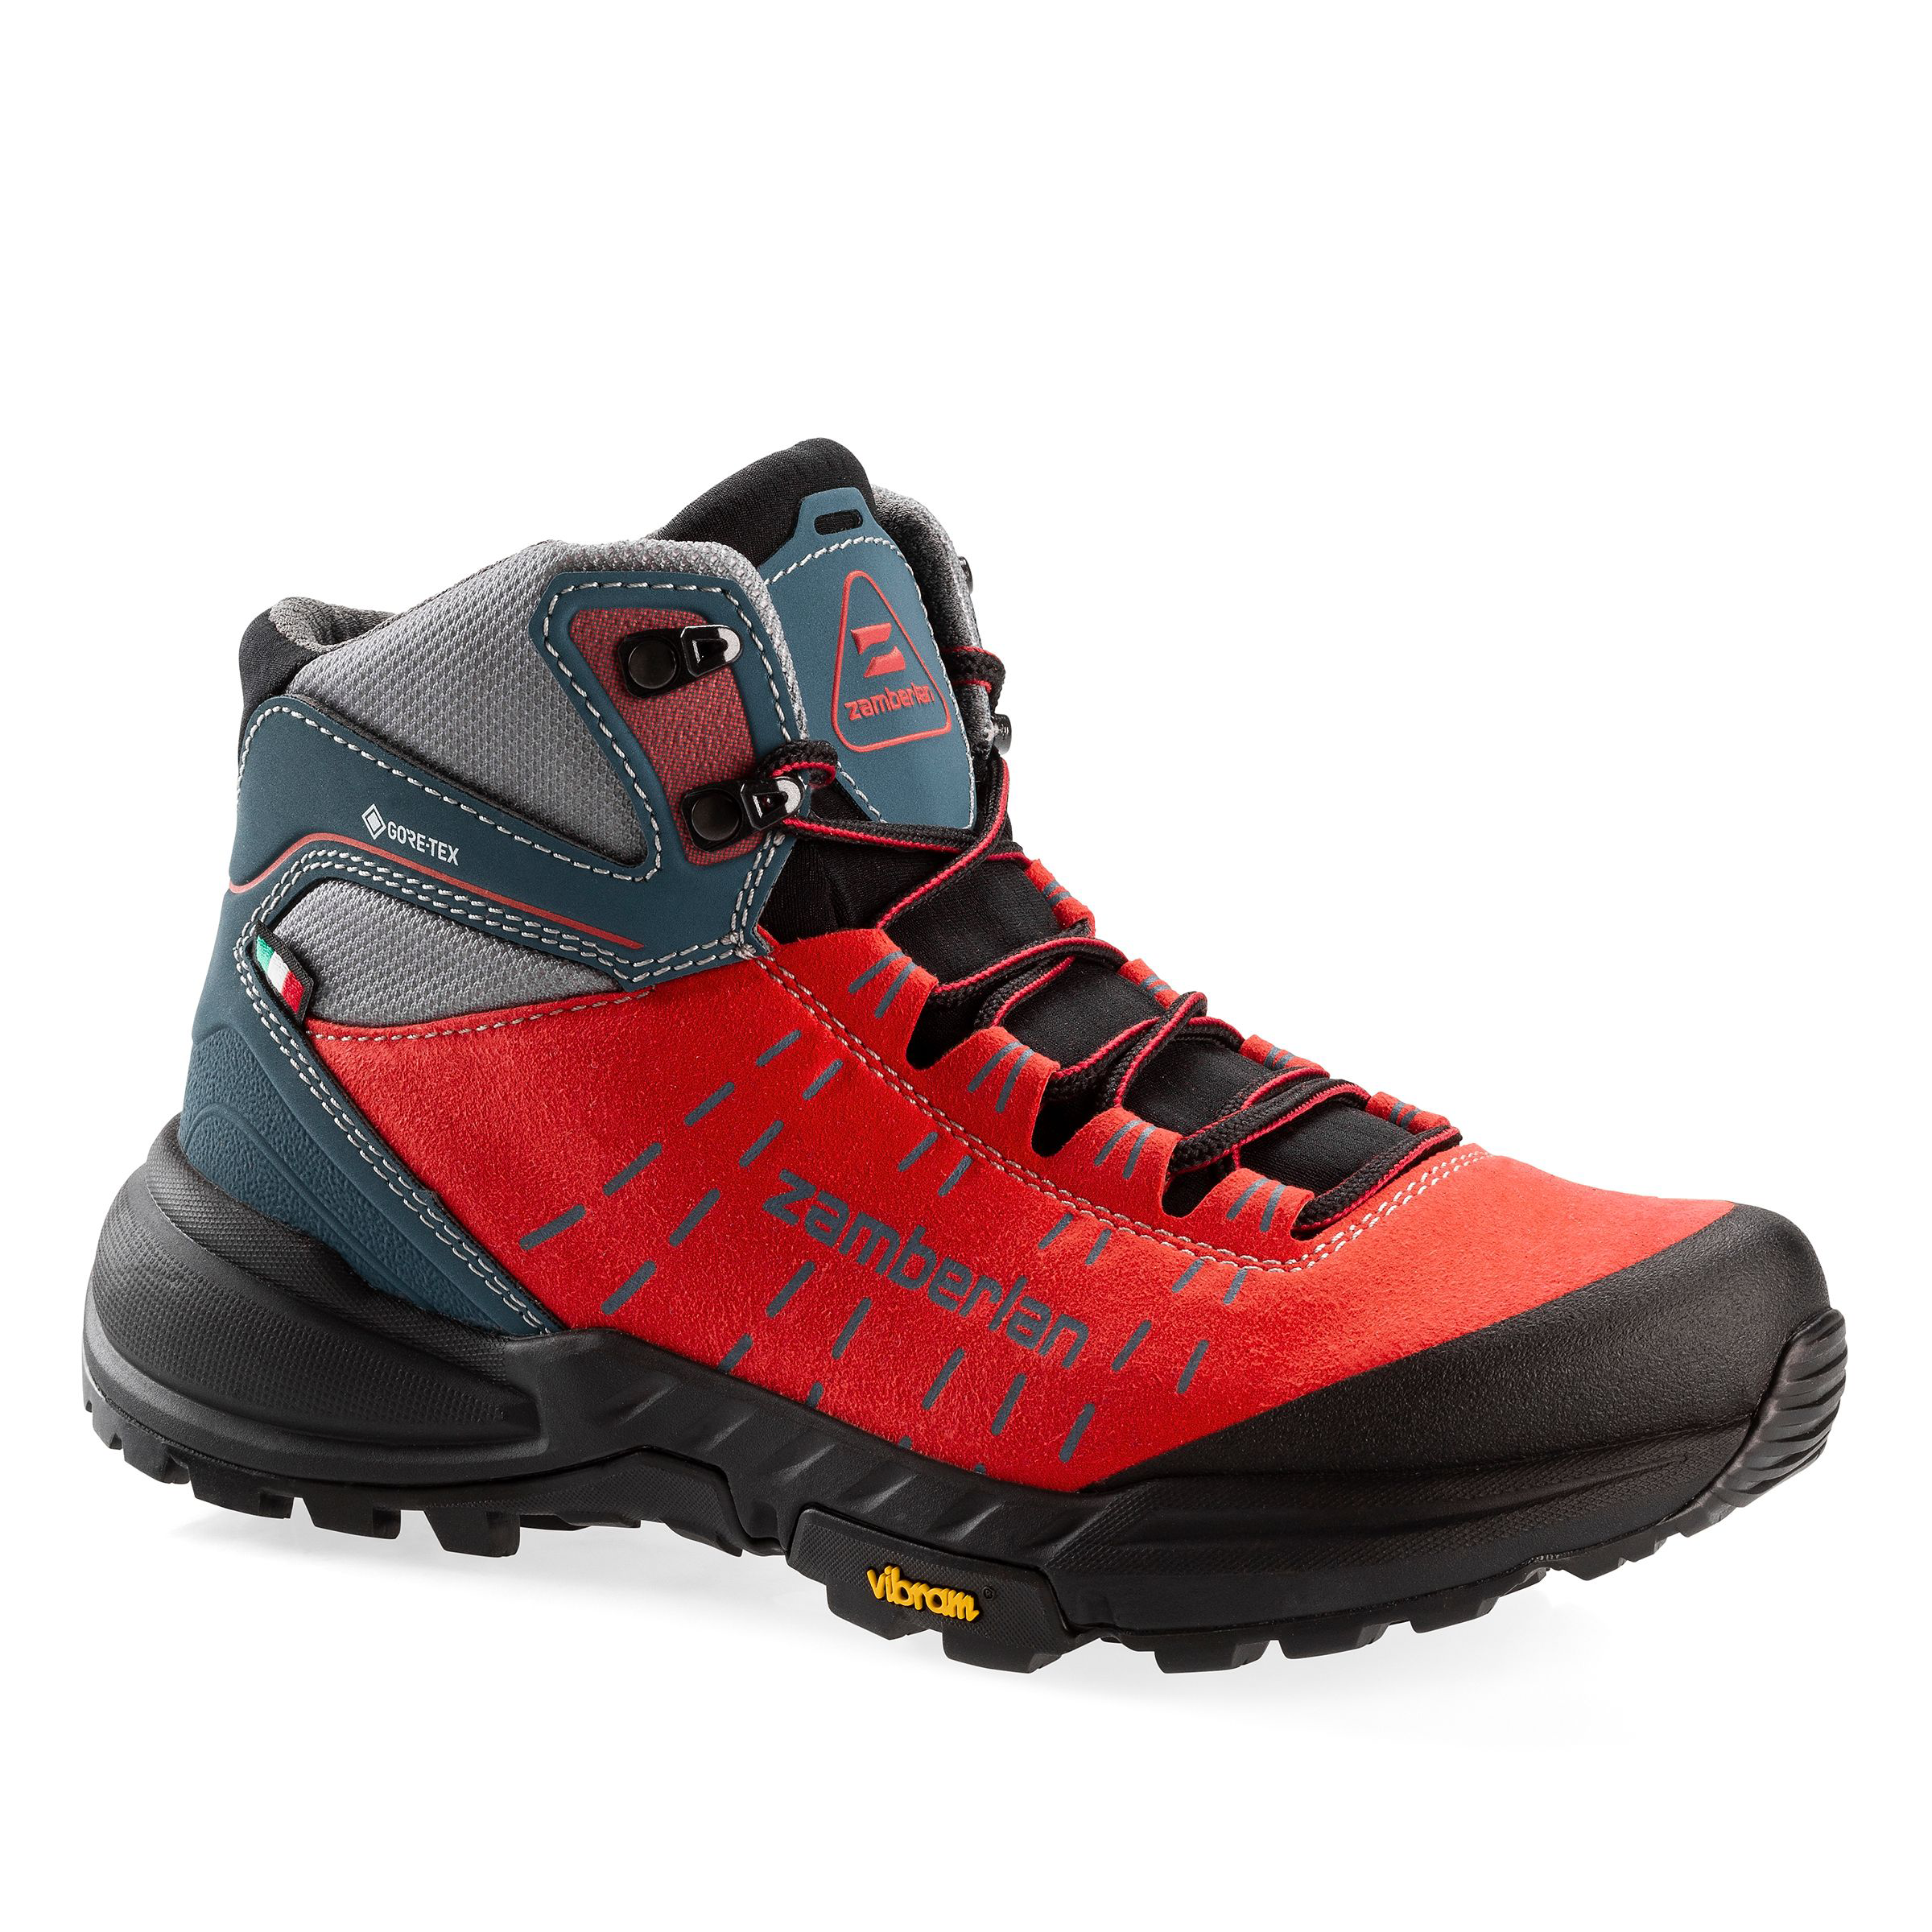 Zamberlan 334 Circe GTX Waterproof Hiking Boots for Ladies - Red - 9M